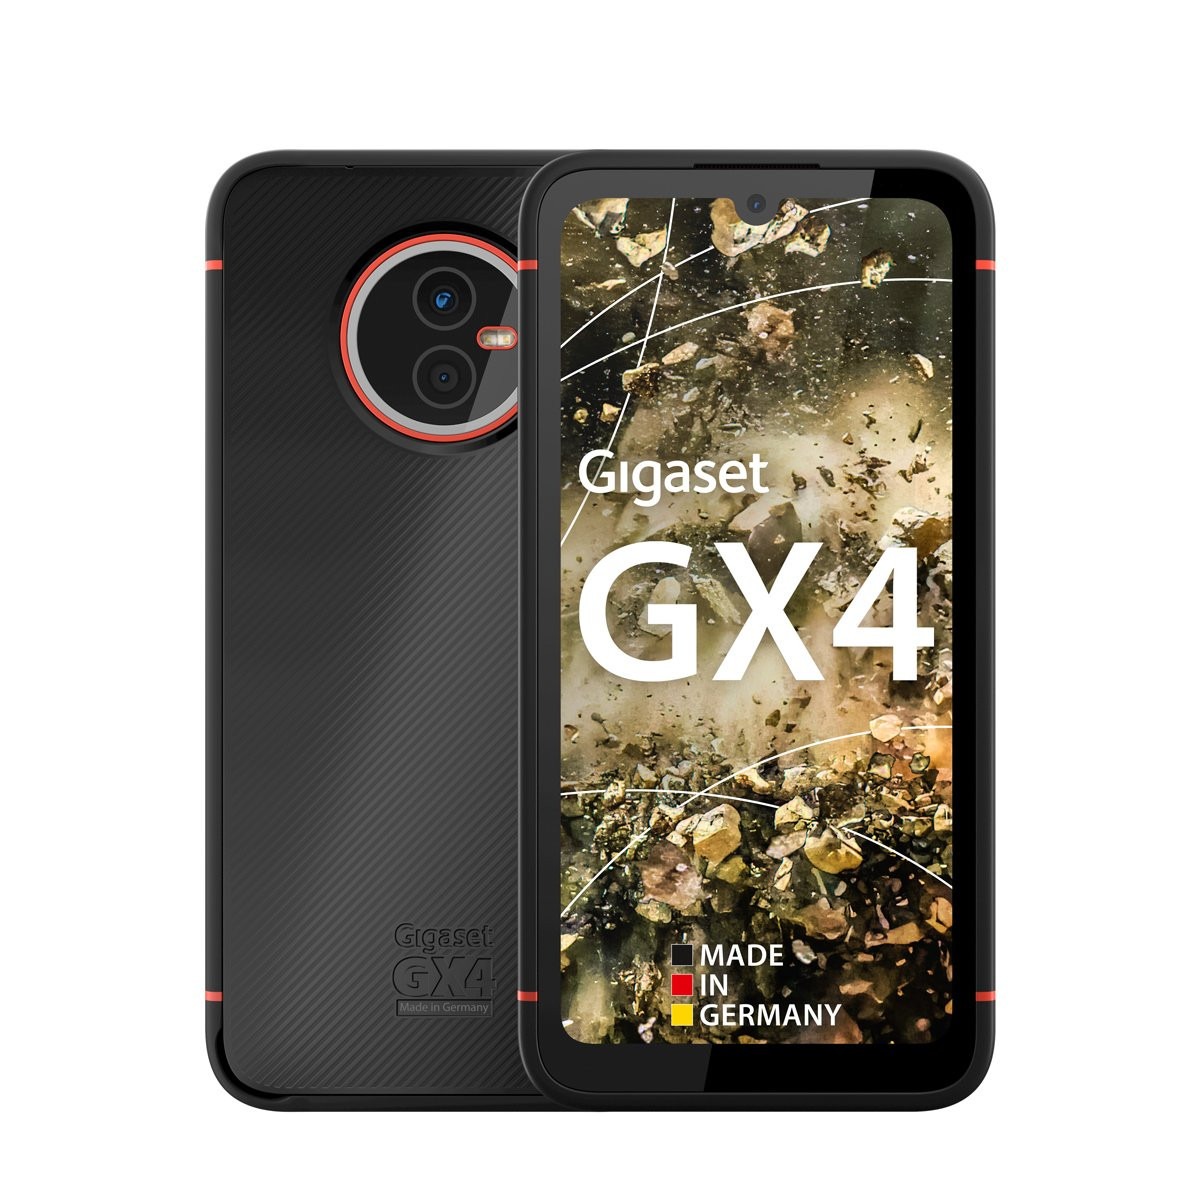 Gigaset GX4 - 64GB - Black